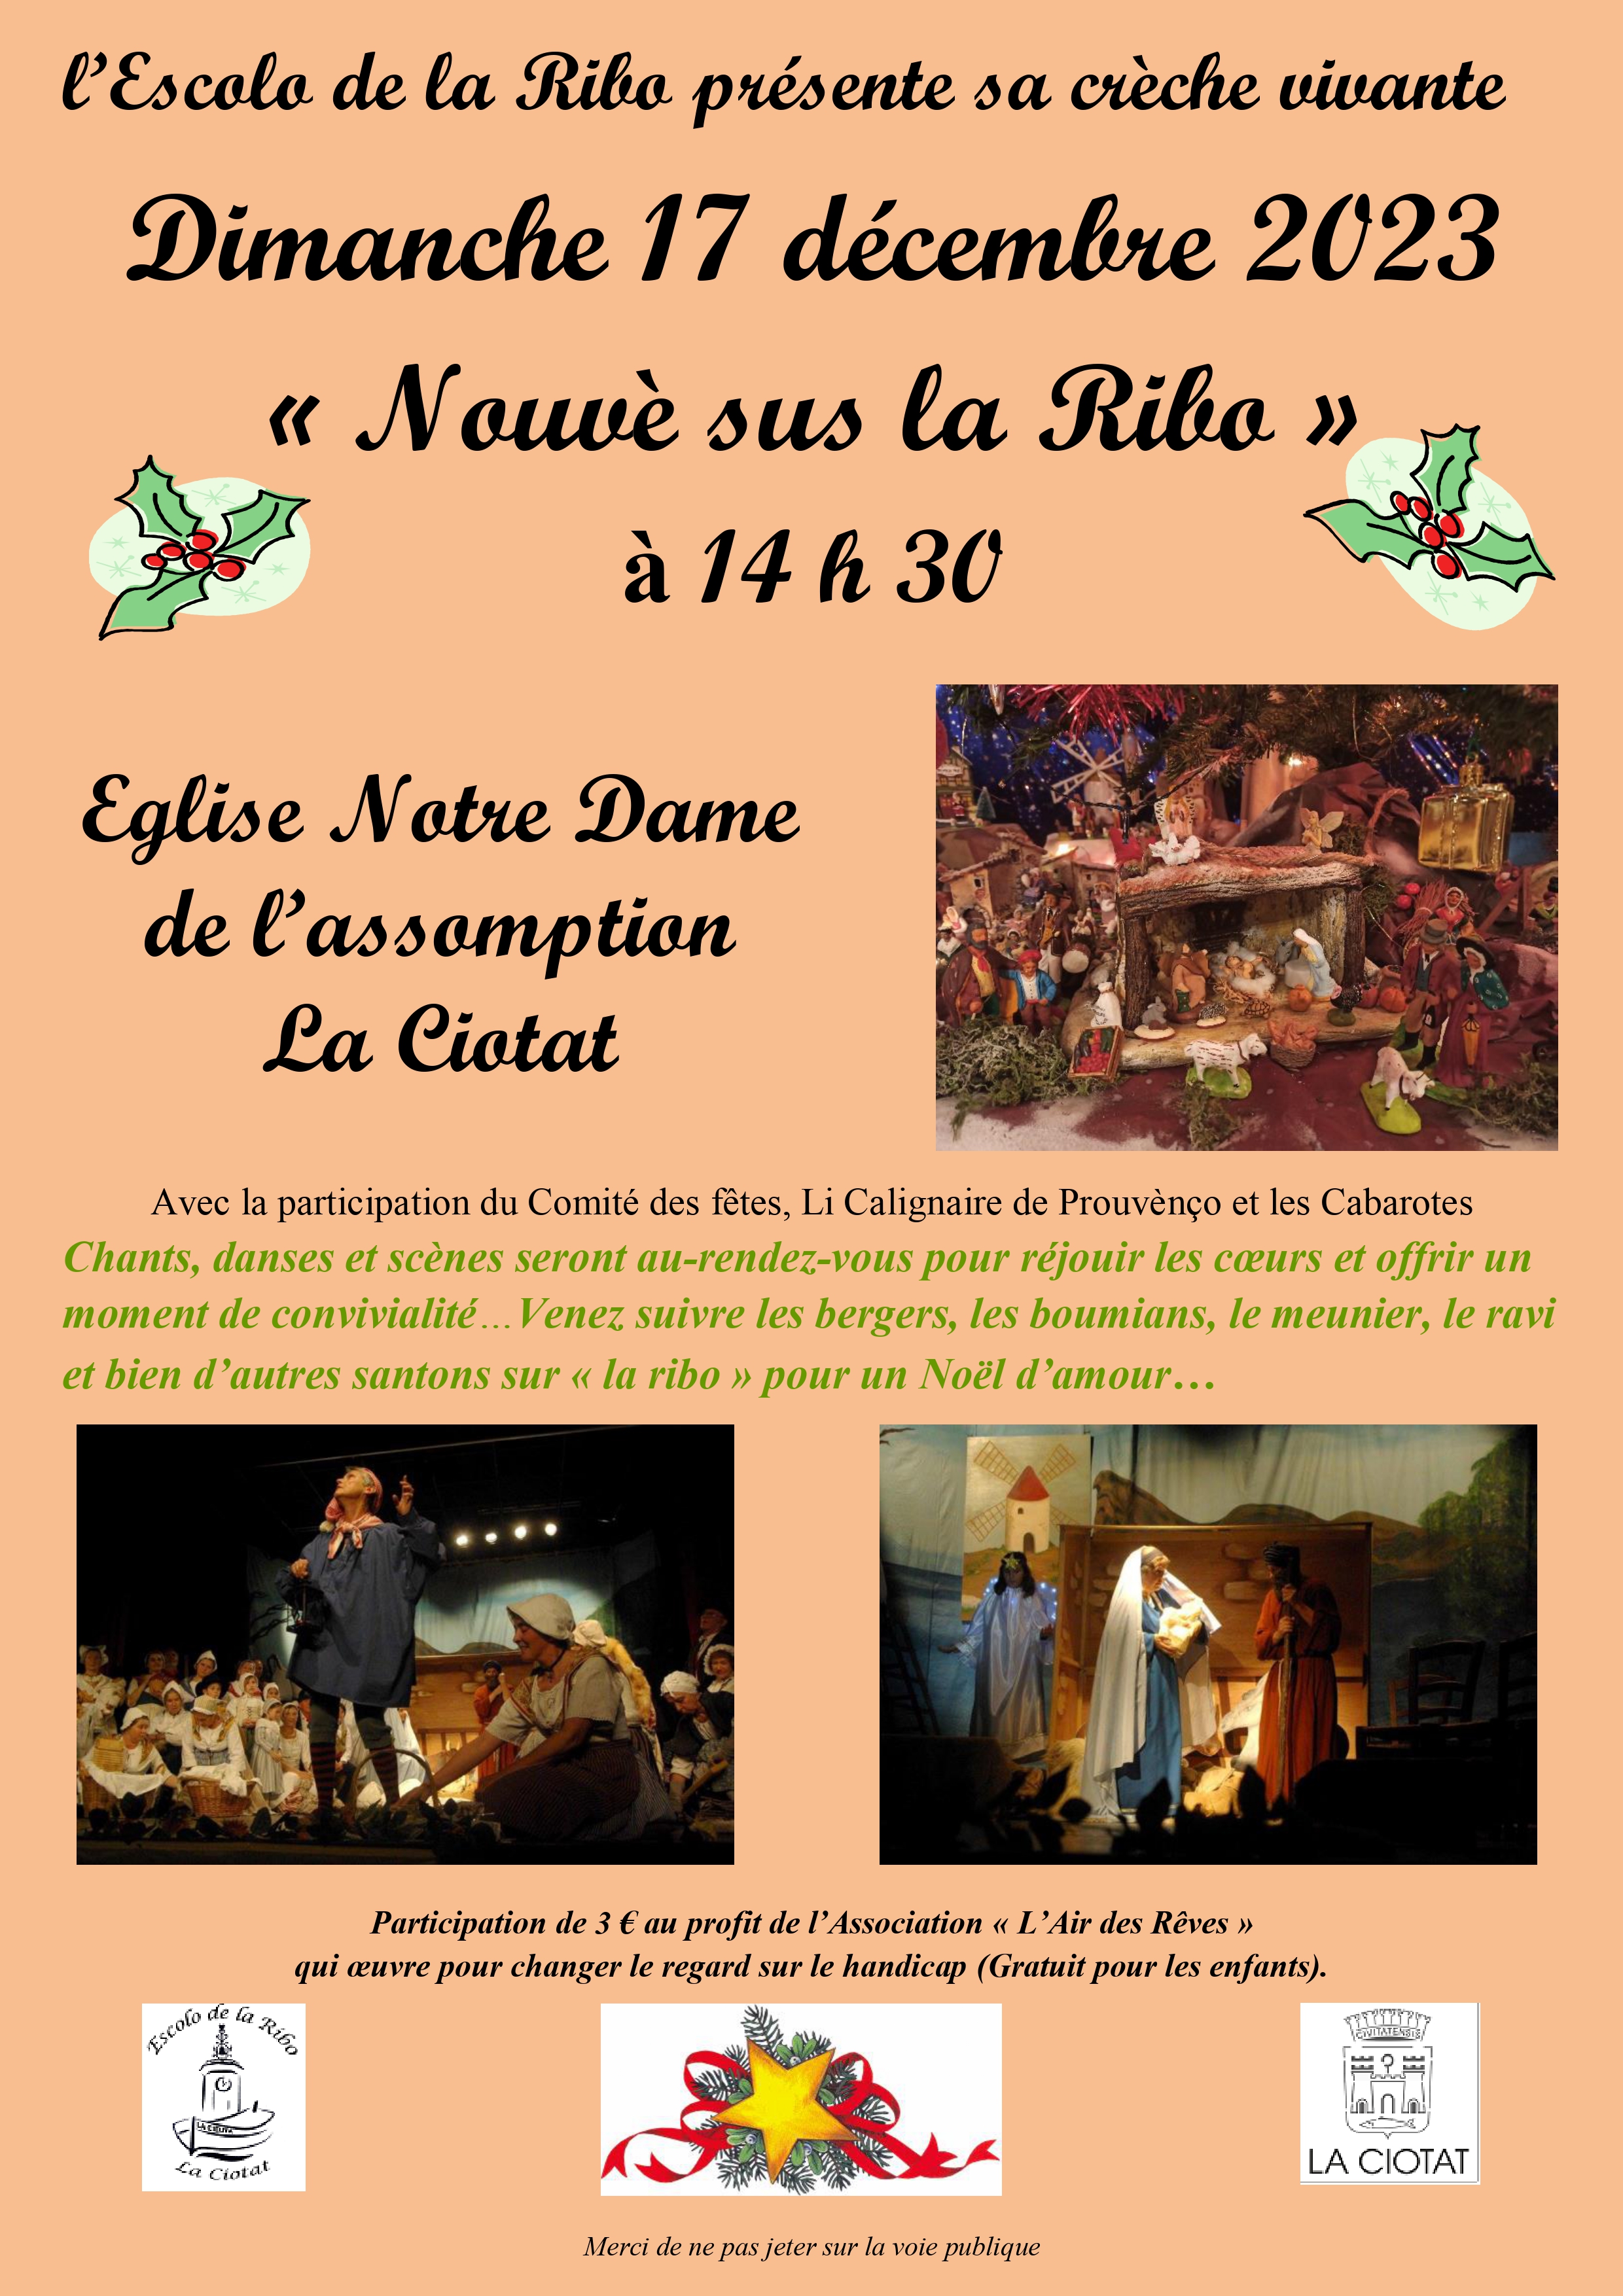 Christmas on the Ribo Live nativity scene (La Ciotat)